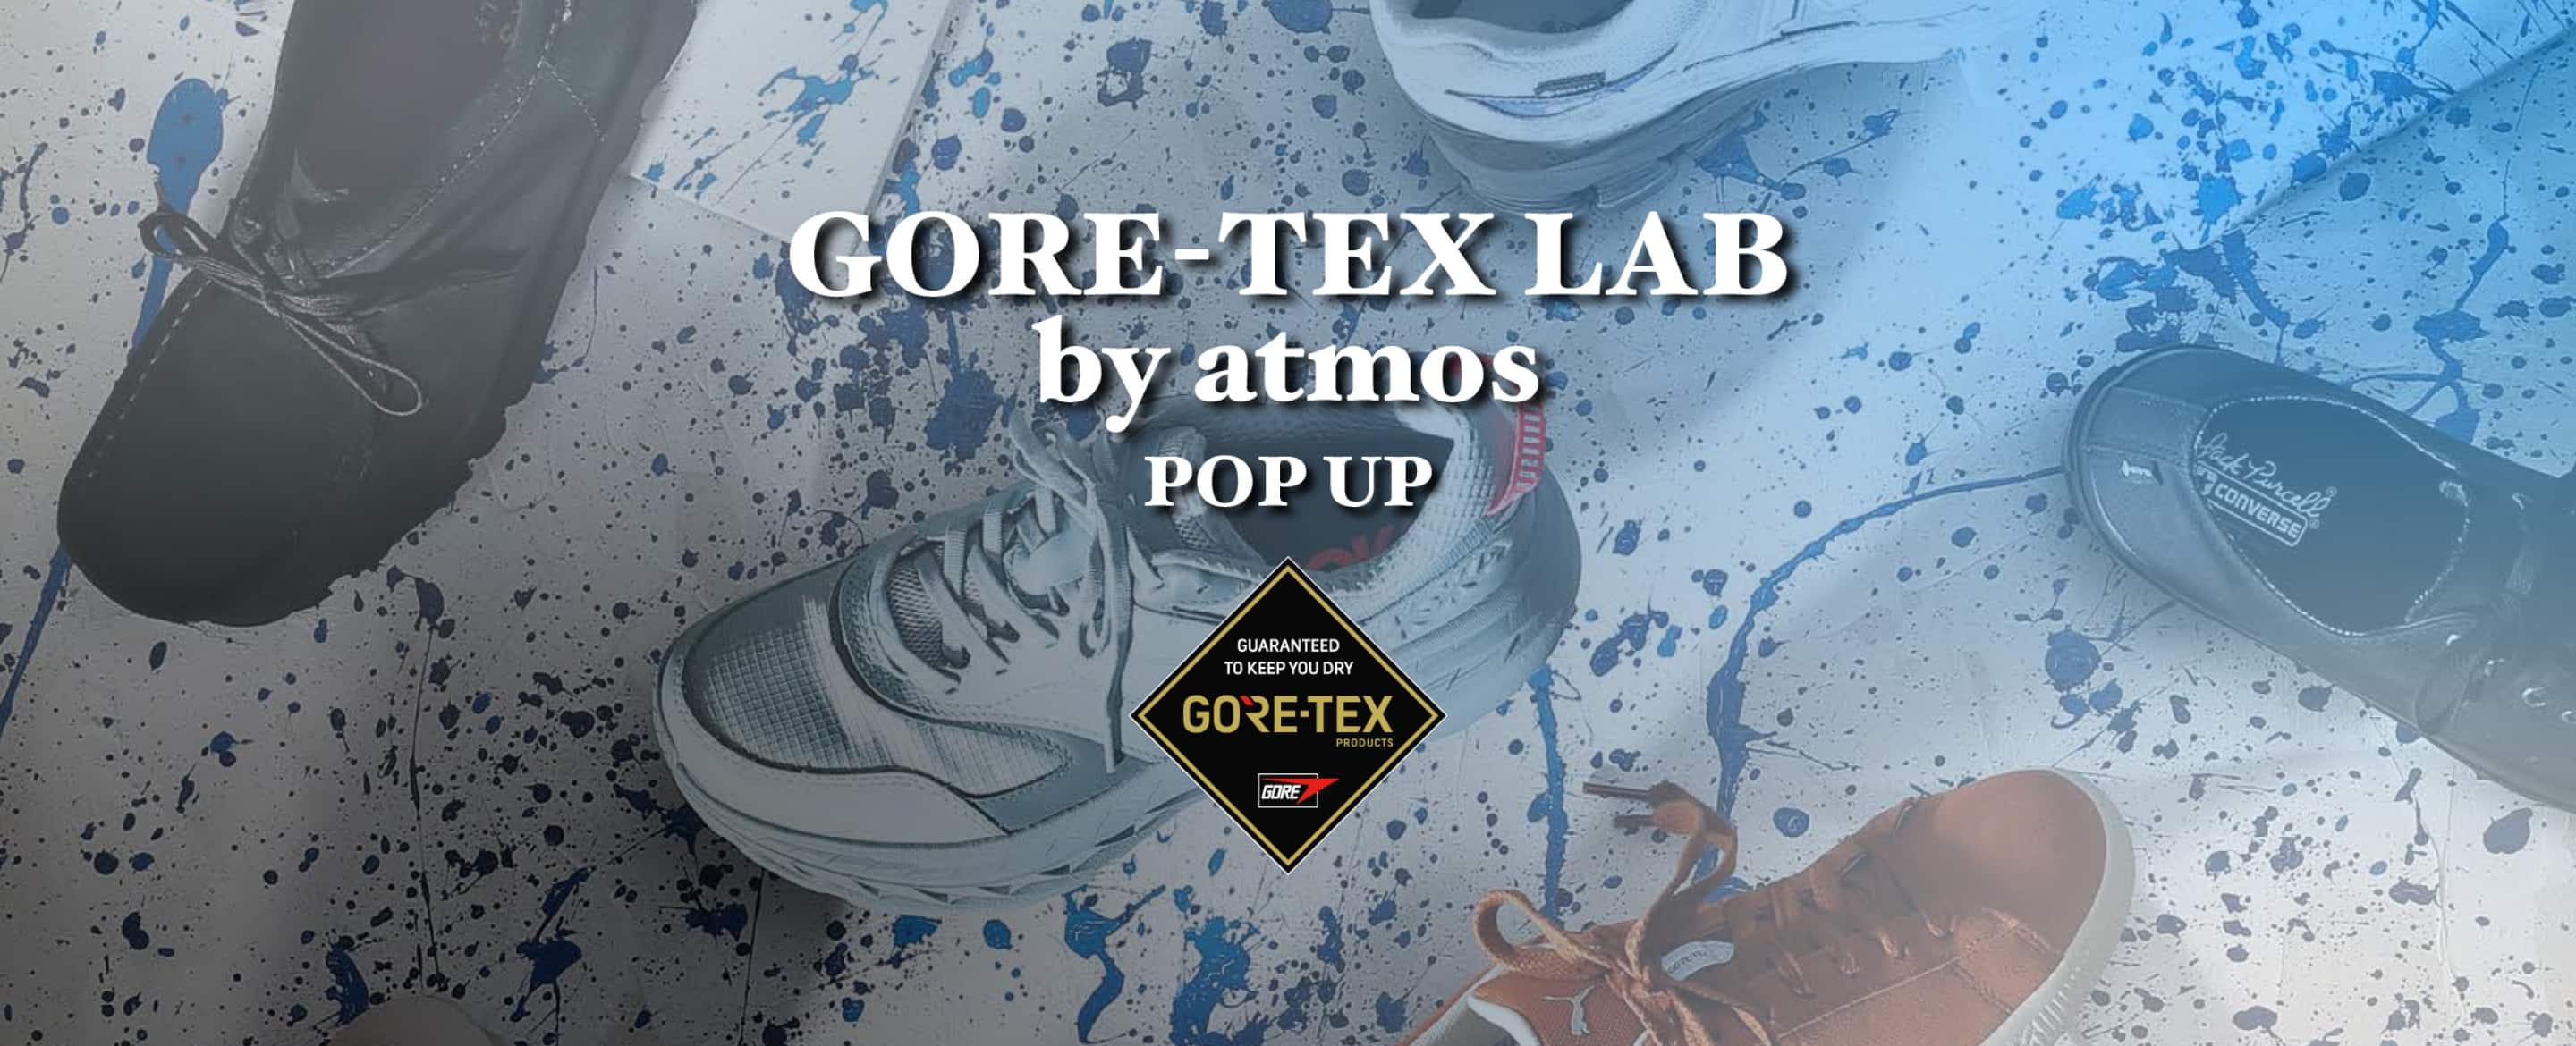 GORE-TEX Lab by atmos